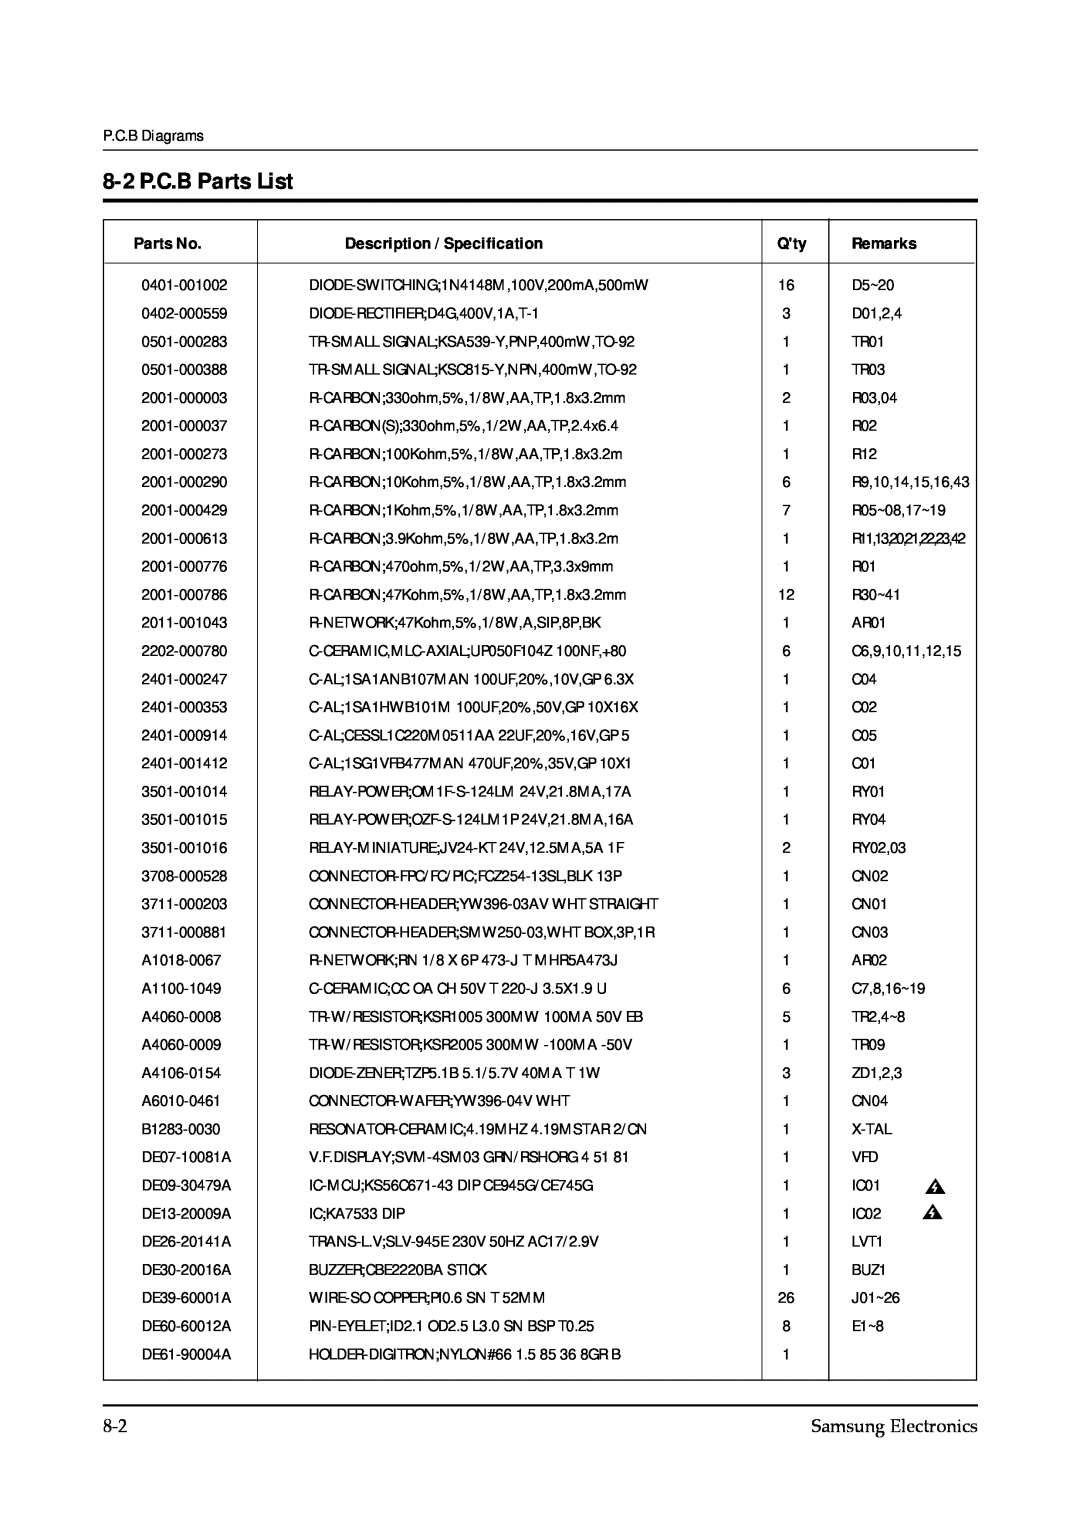 Samsung CE745GR service manual 8-2 P.C.B Parts List 